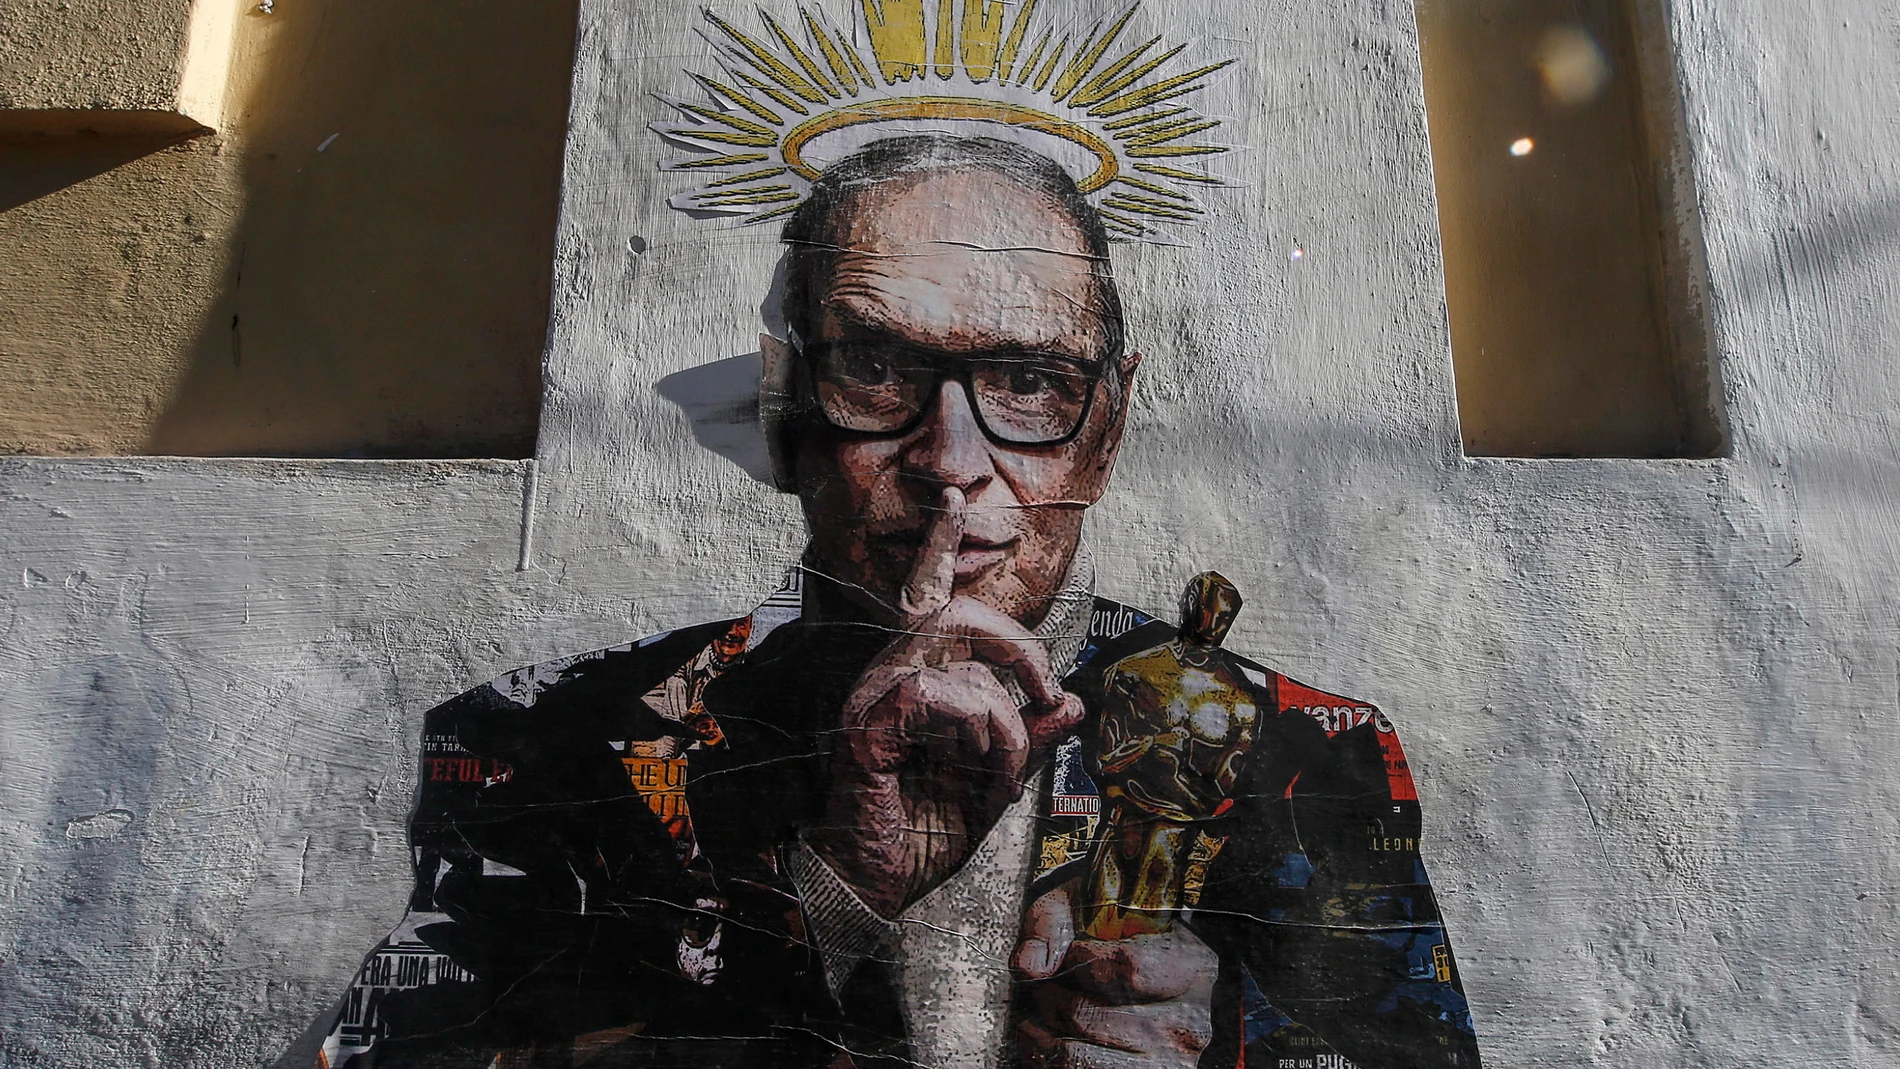 Graffiti mural of Ennio Morricone in Rome